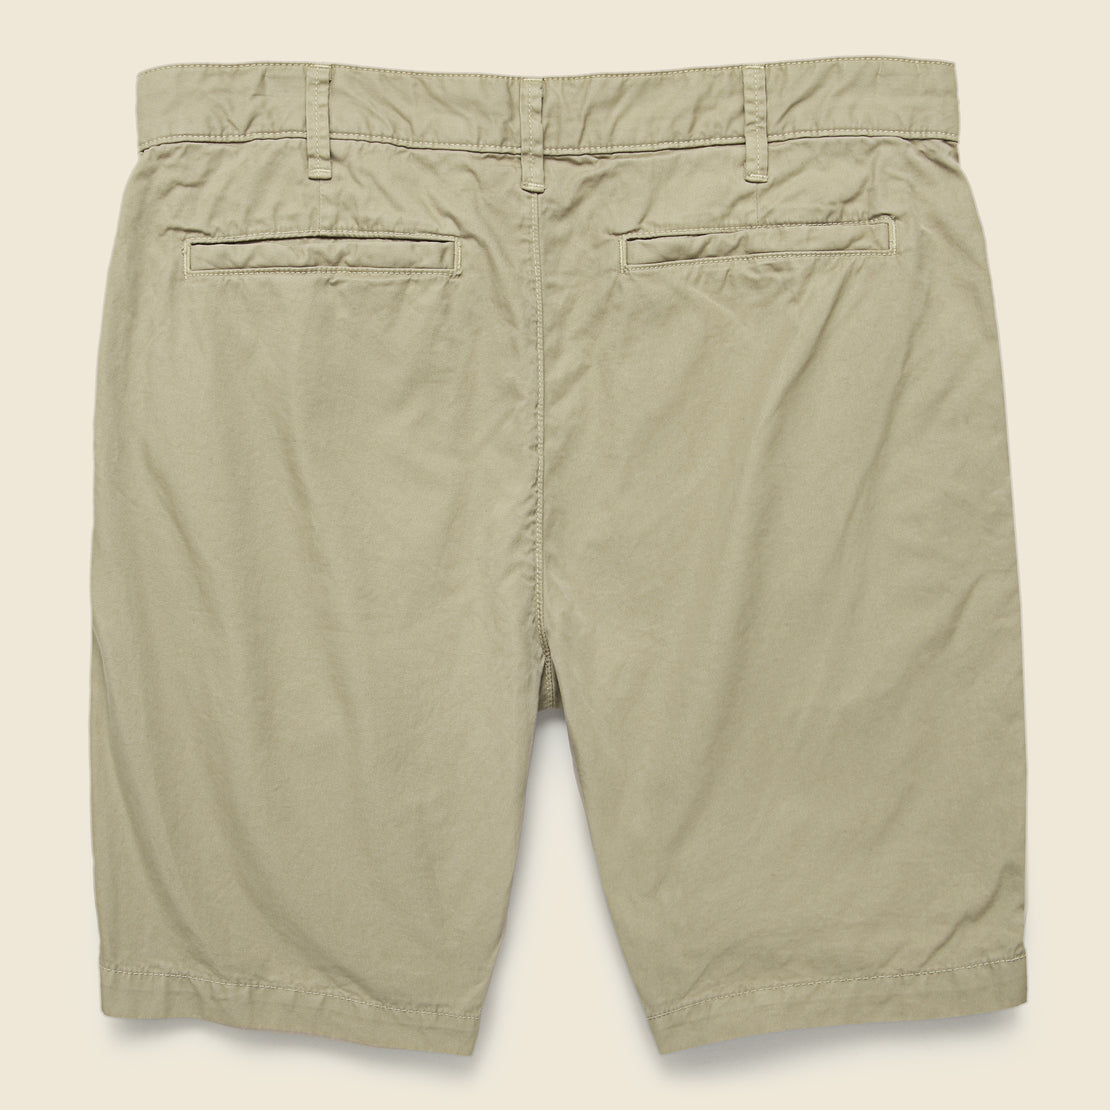 8-inch Twill Bermuda Short - Khaki - Save Khaki - STAG Provisions - Shorts - Solid